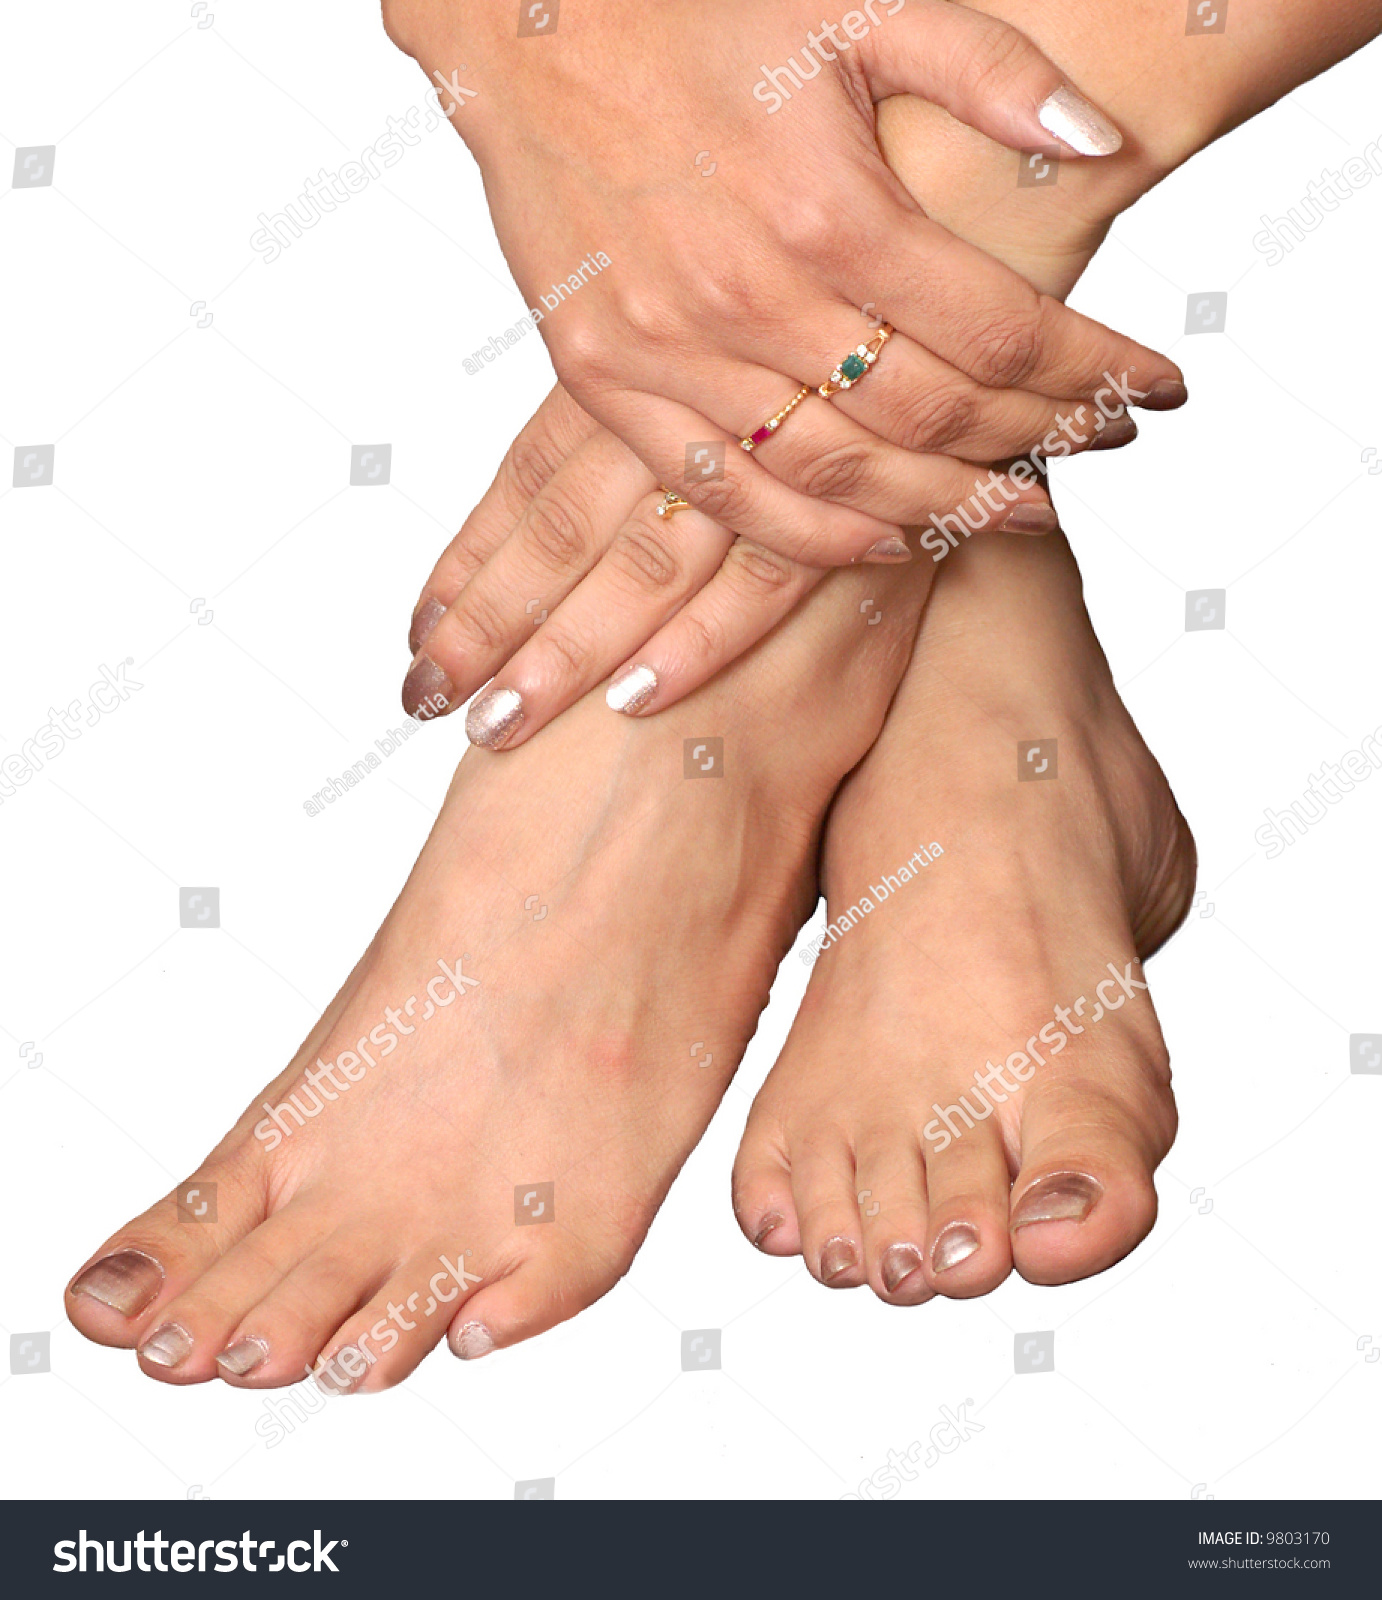 White girls pretty feet